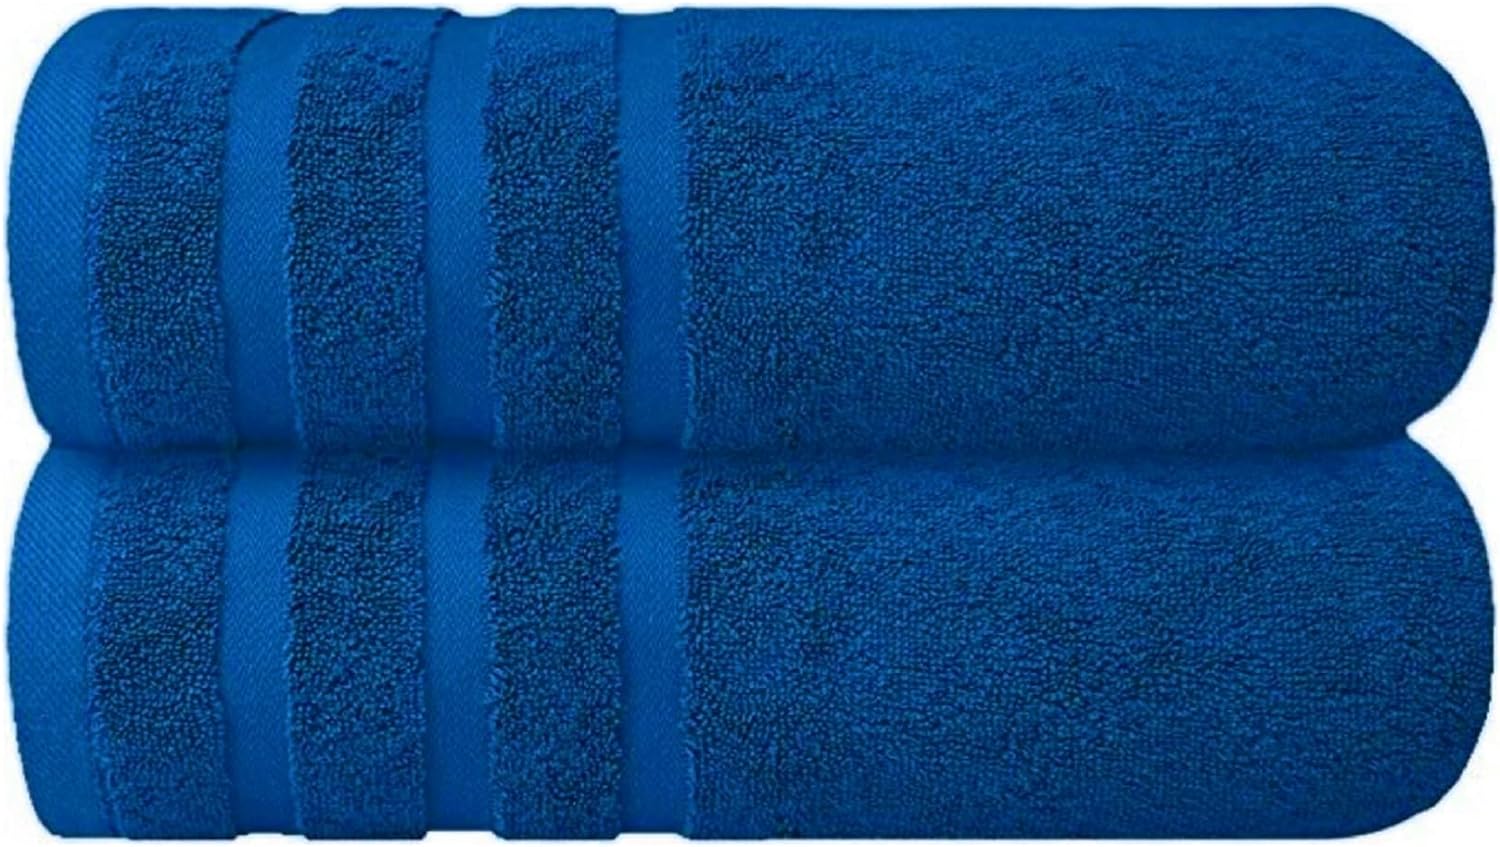 Extra Large Bath Sheets Towels 75 x 150cm 100% Egyptian Cotton Bath Towels 600GSM